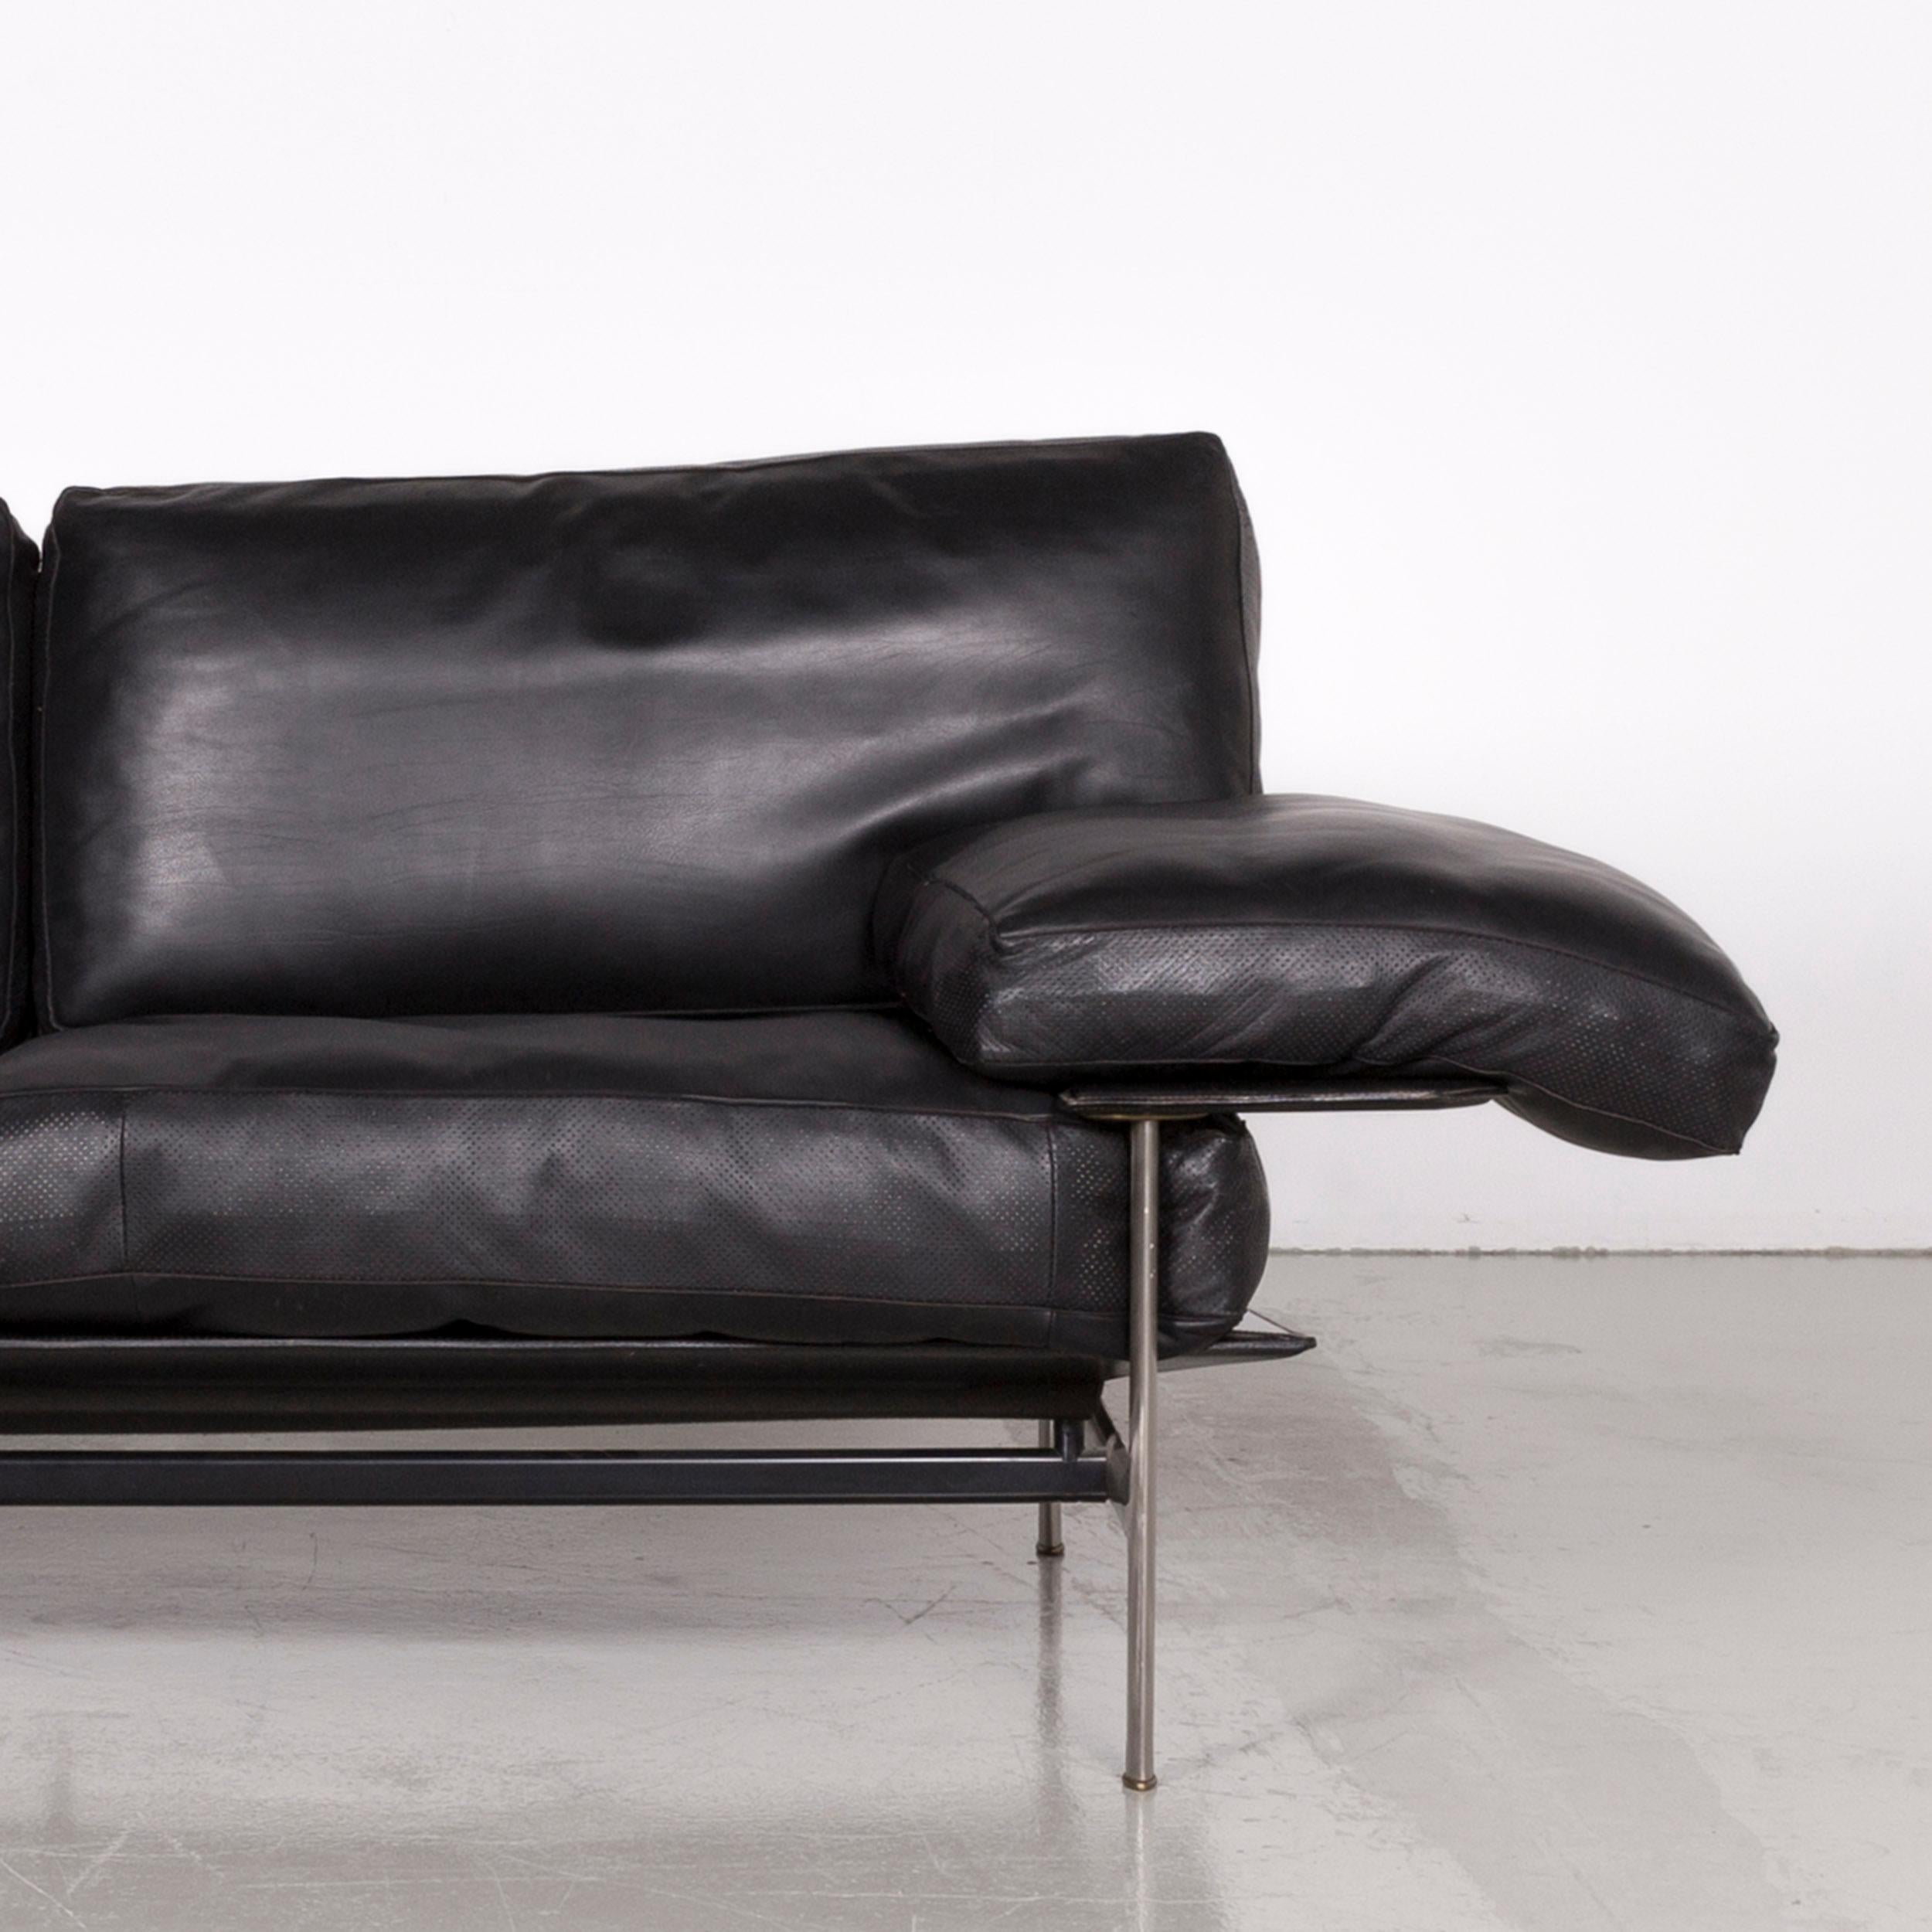 Contemporary B&B Italia Diesis Designer Sofa Leather Black Three-Seat Couch Modern For Sale